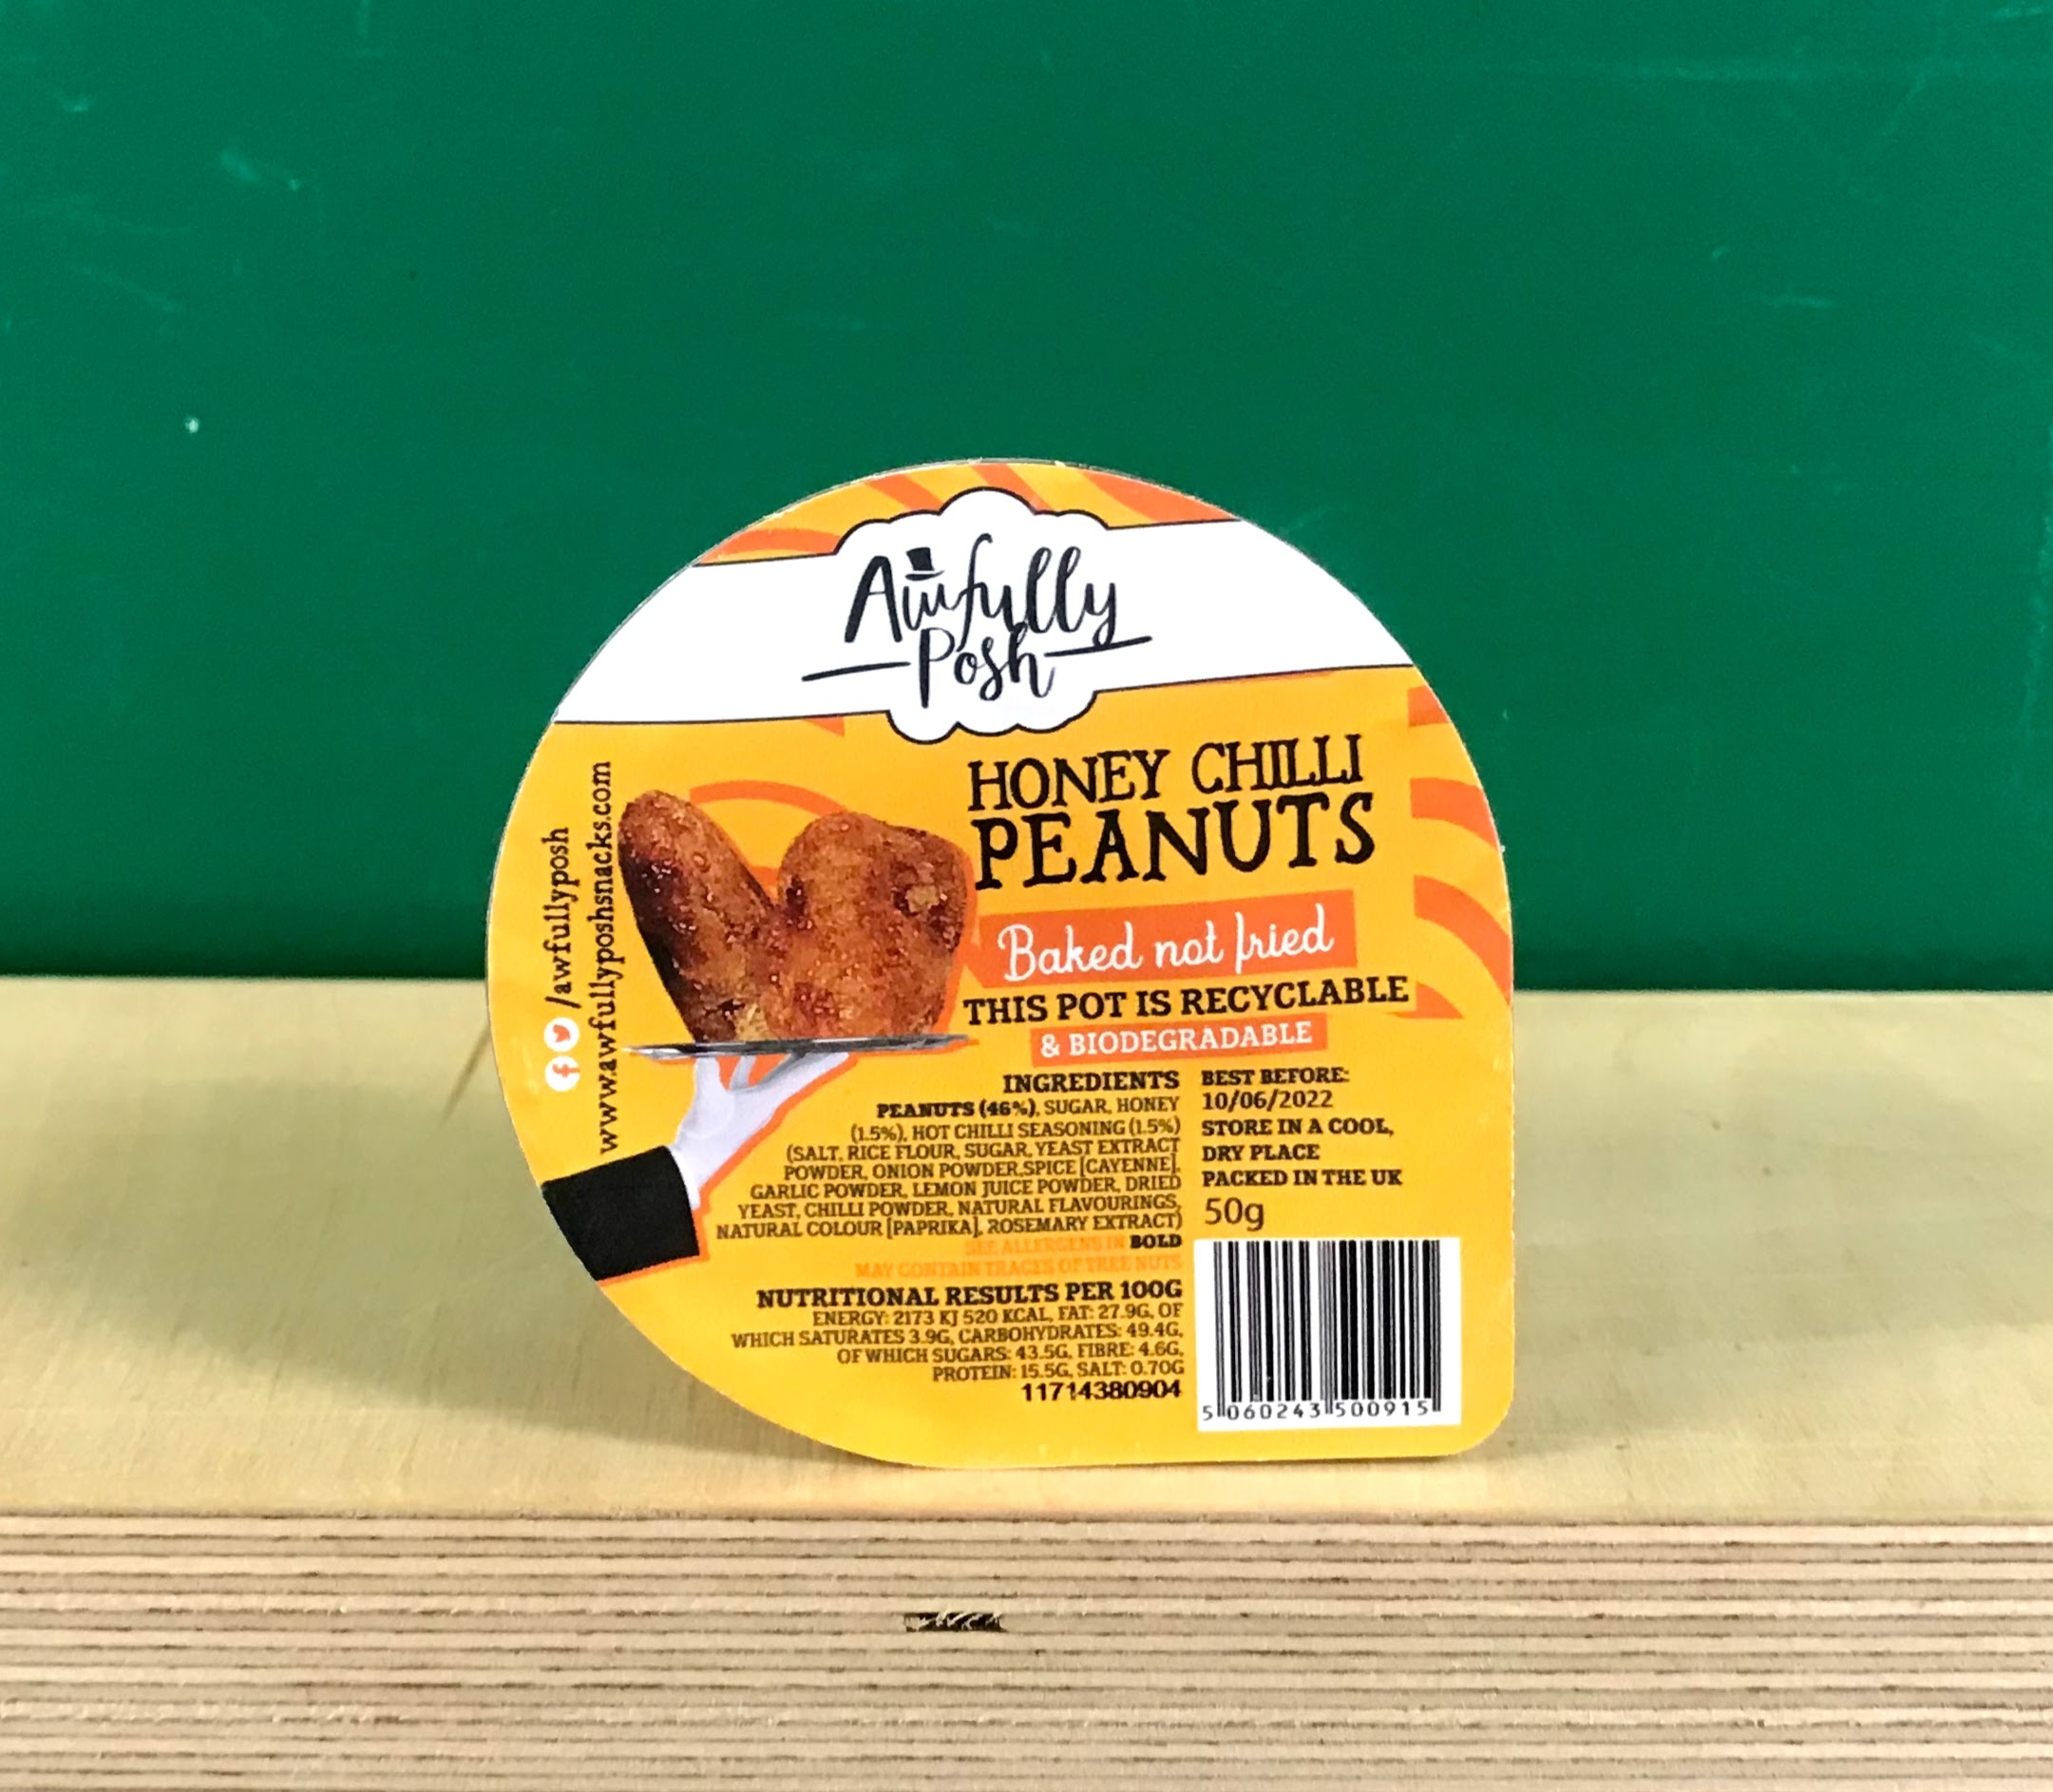 Awfully Posh Honey Chilli Peanuts